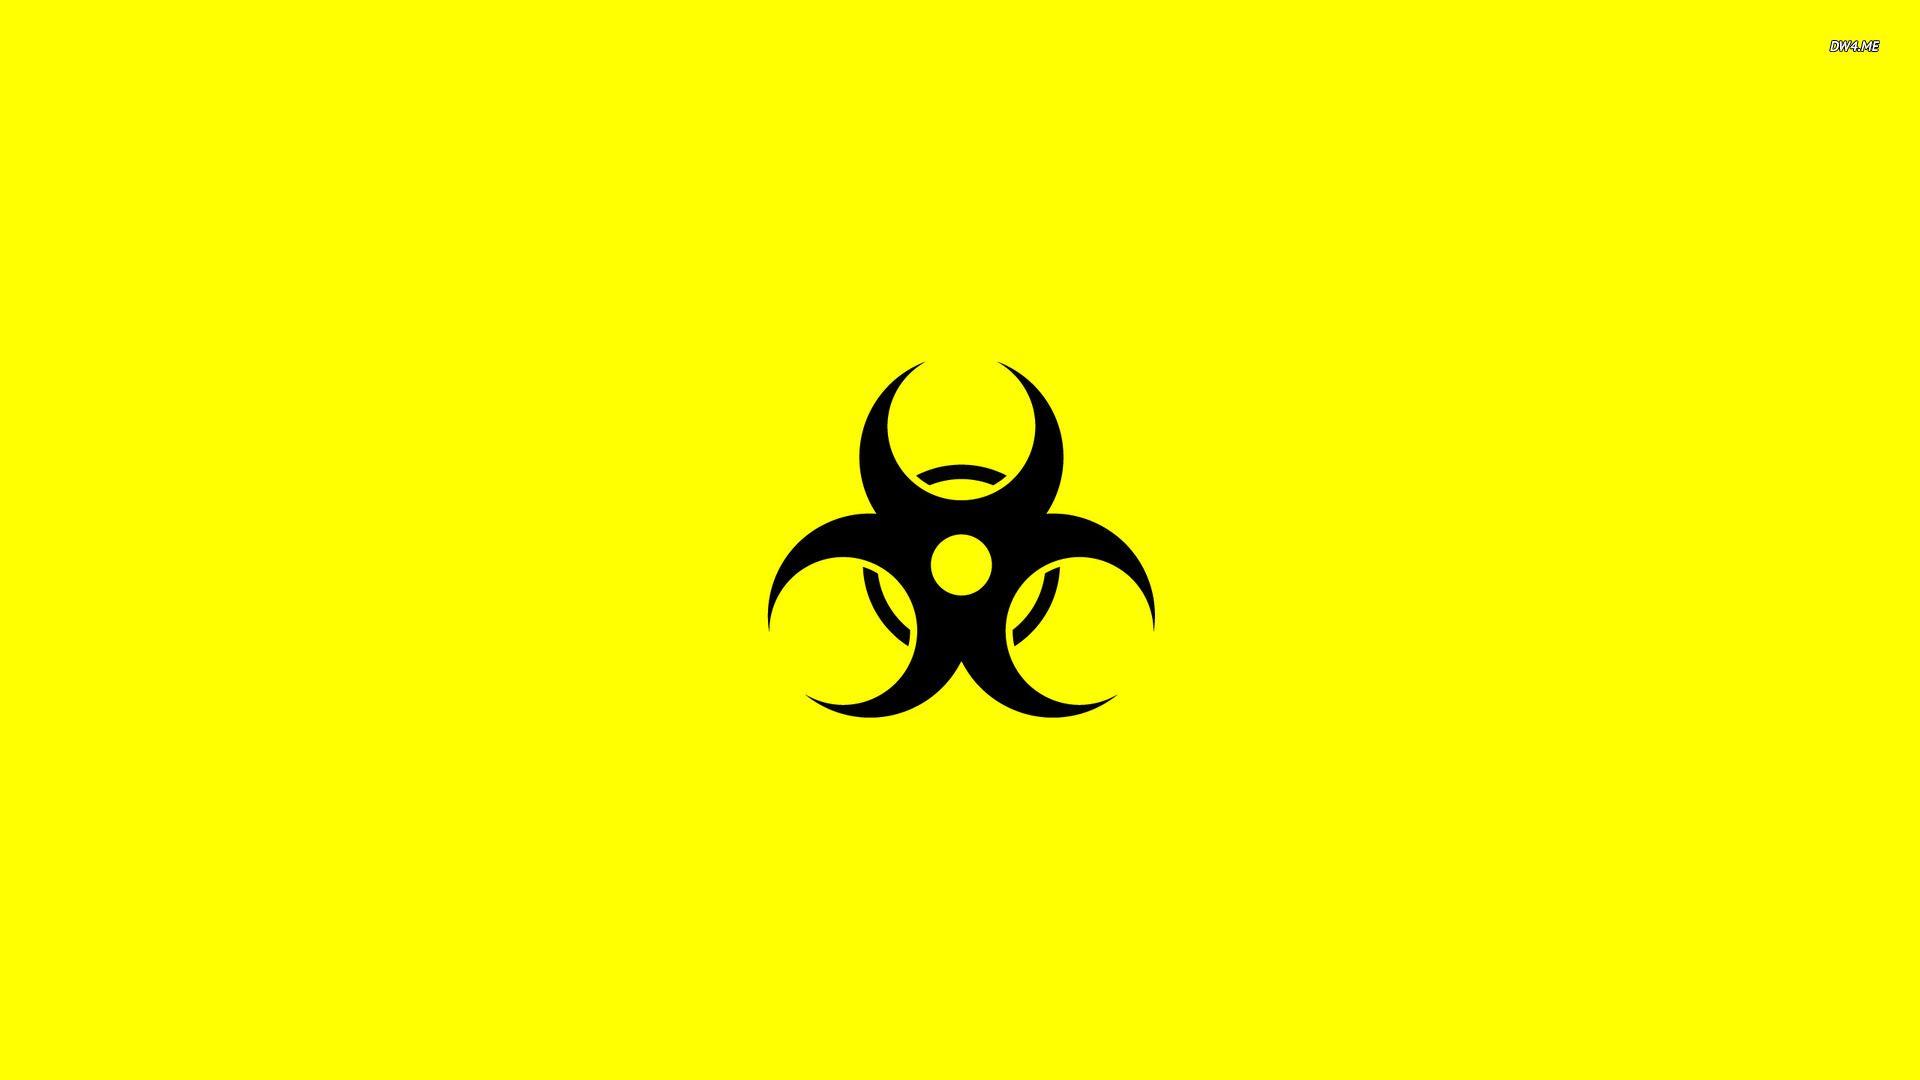 Free Cool Biohazard Symbols, Download Free Clip Art, Free Clip Art